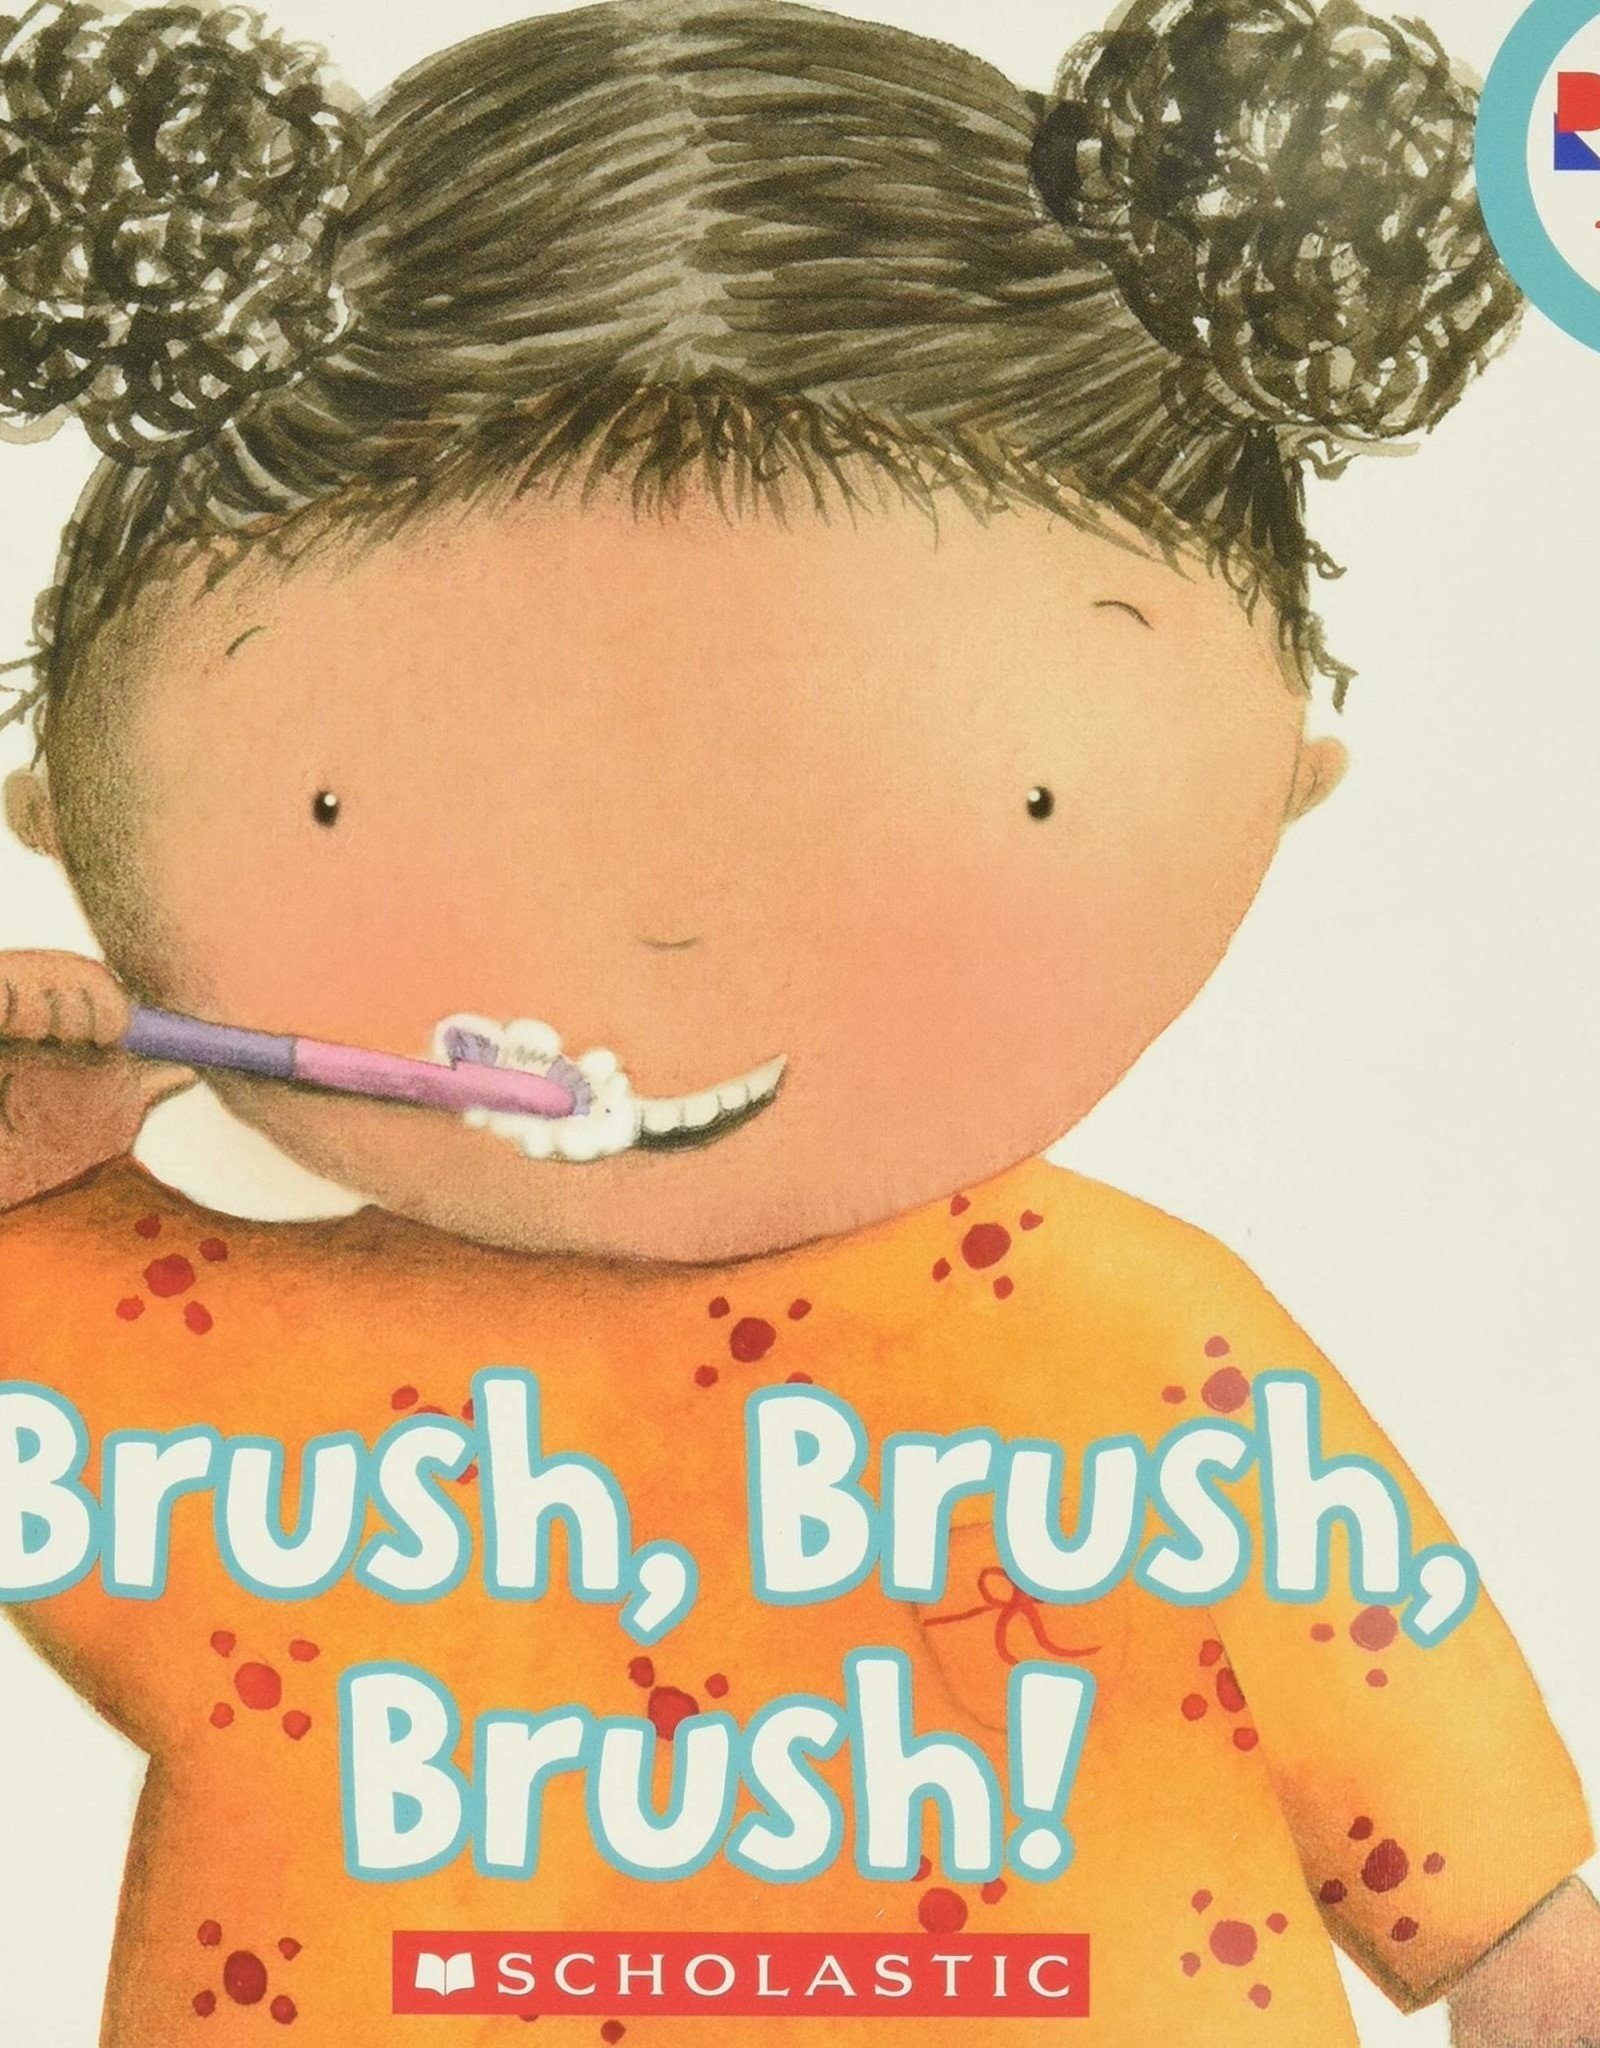 Scholastic Brush, Brush, Brush!